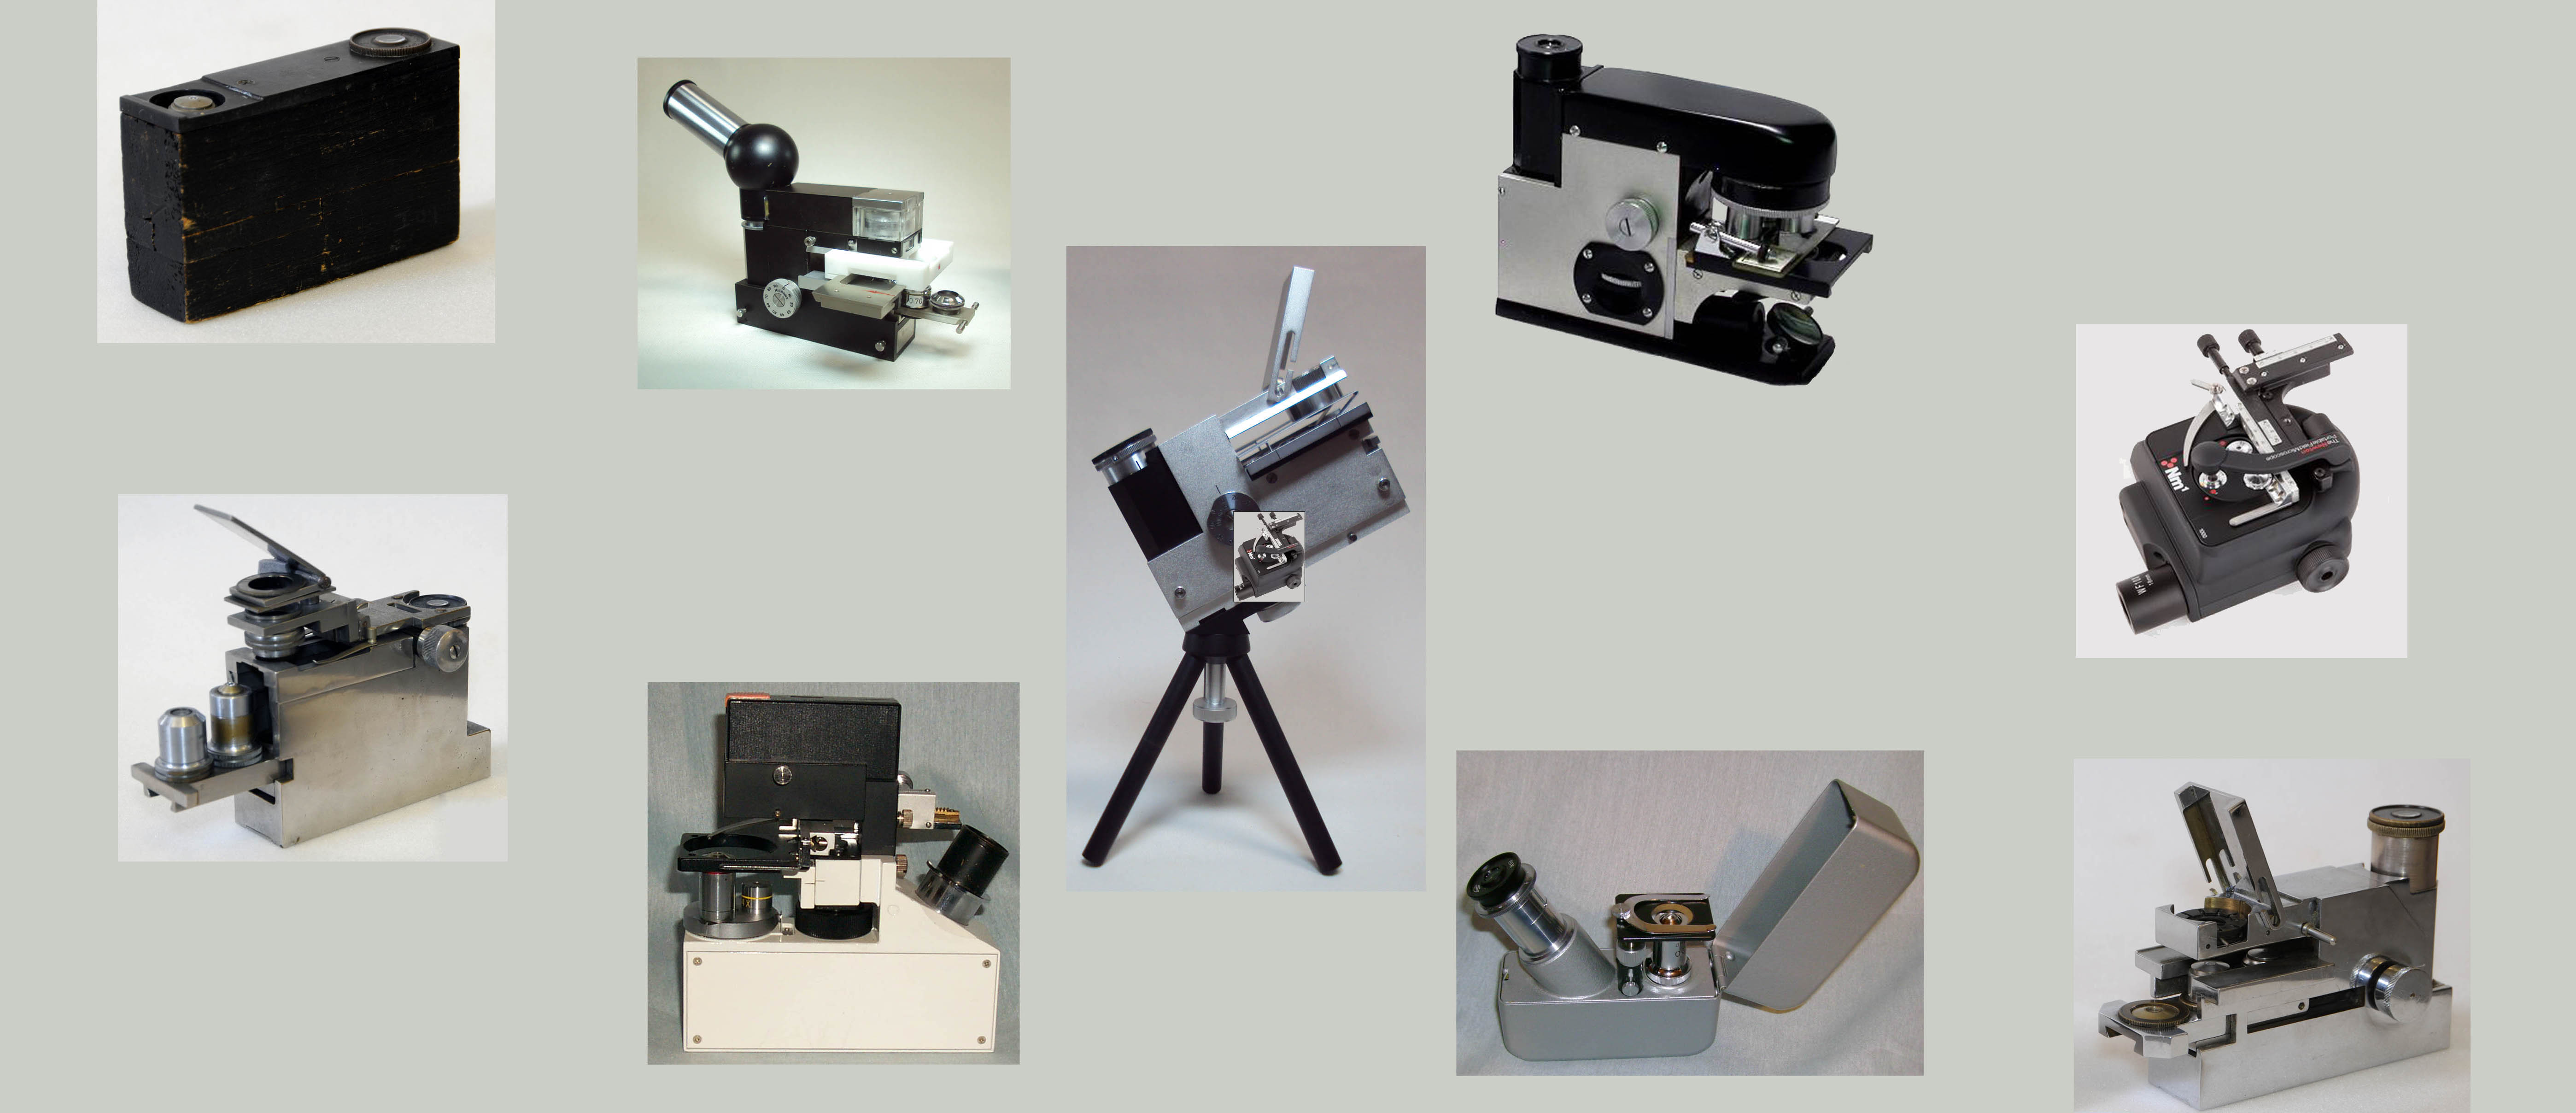 McArthur Microscope variants